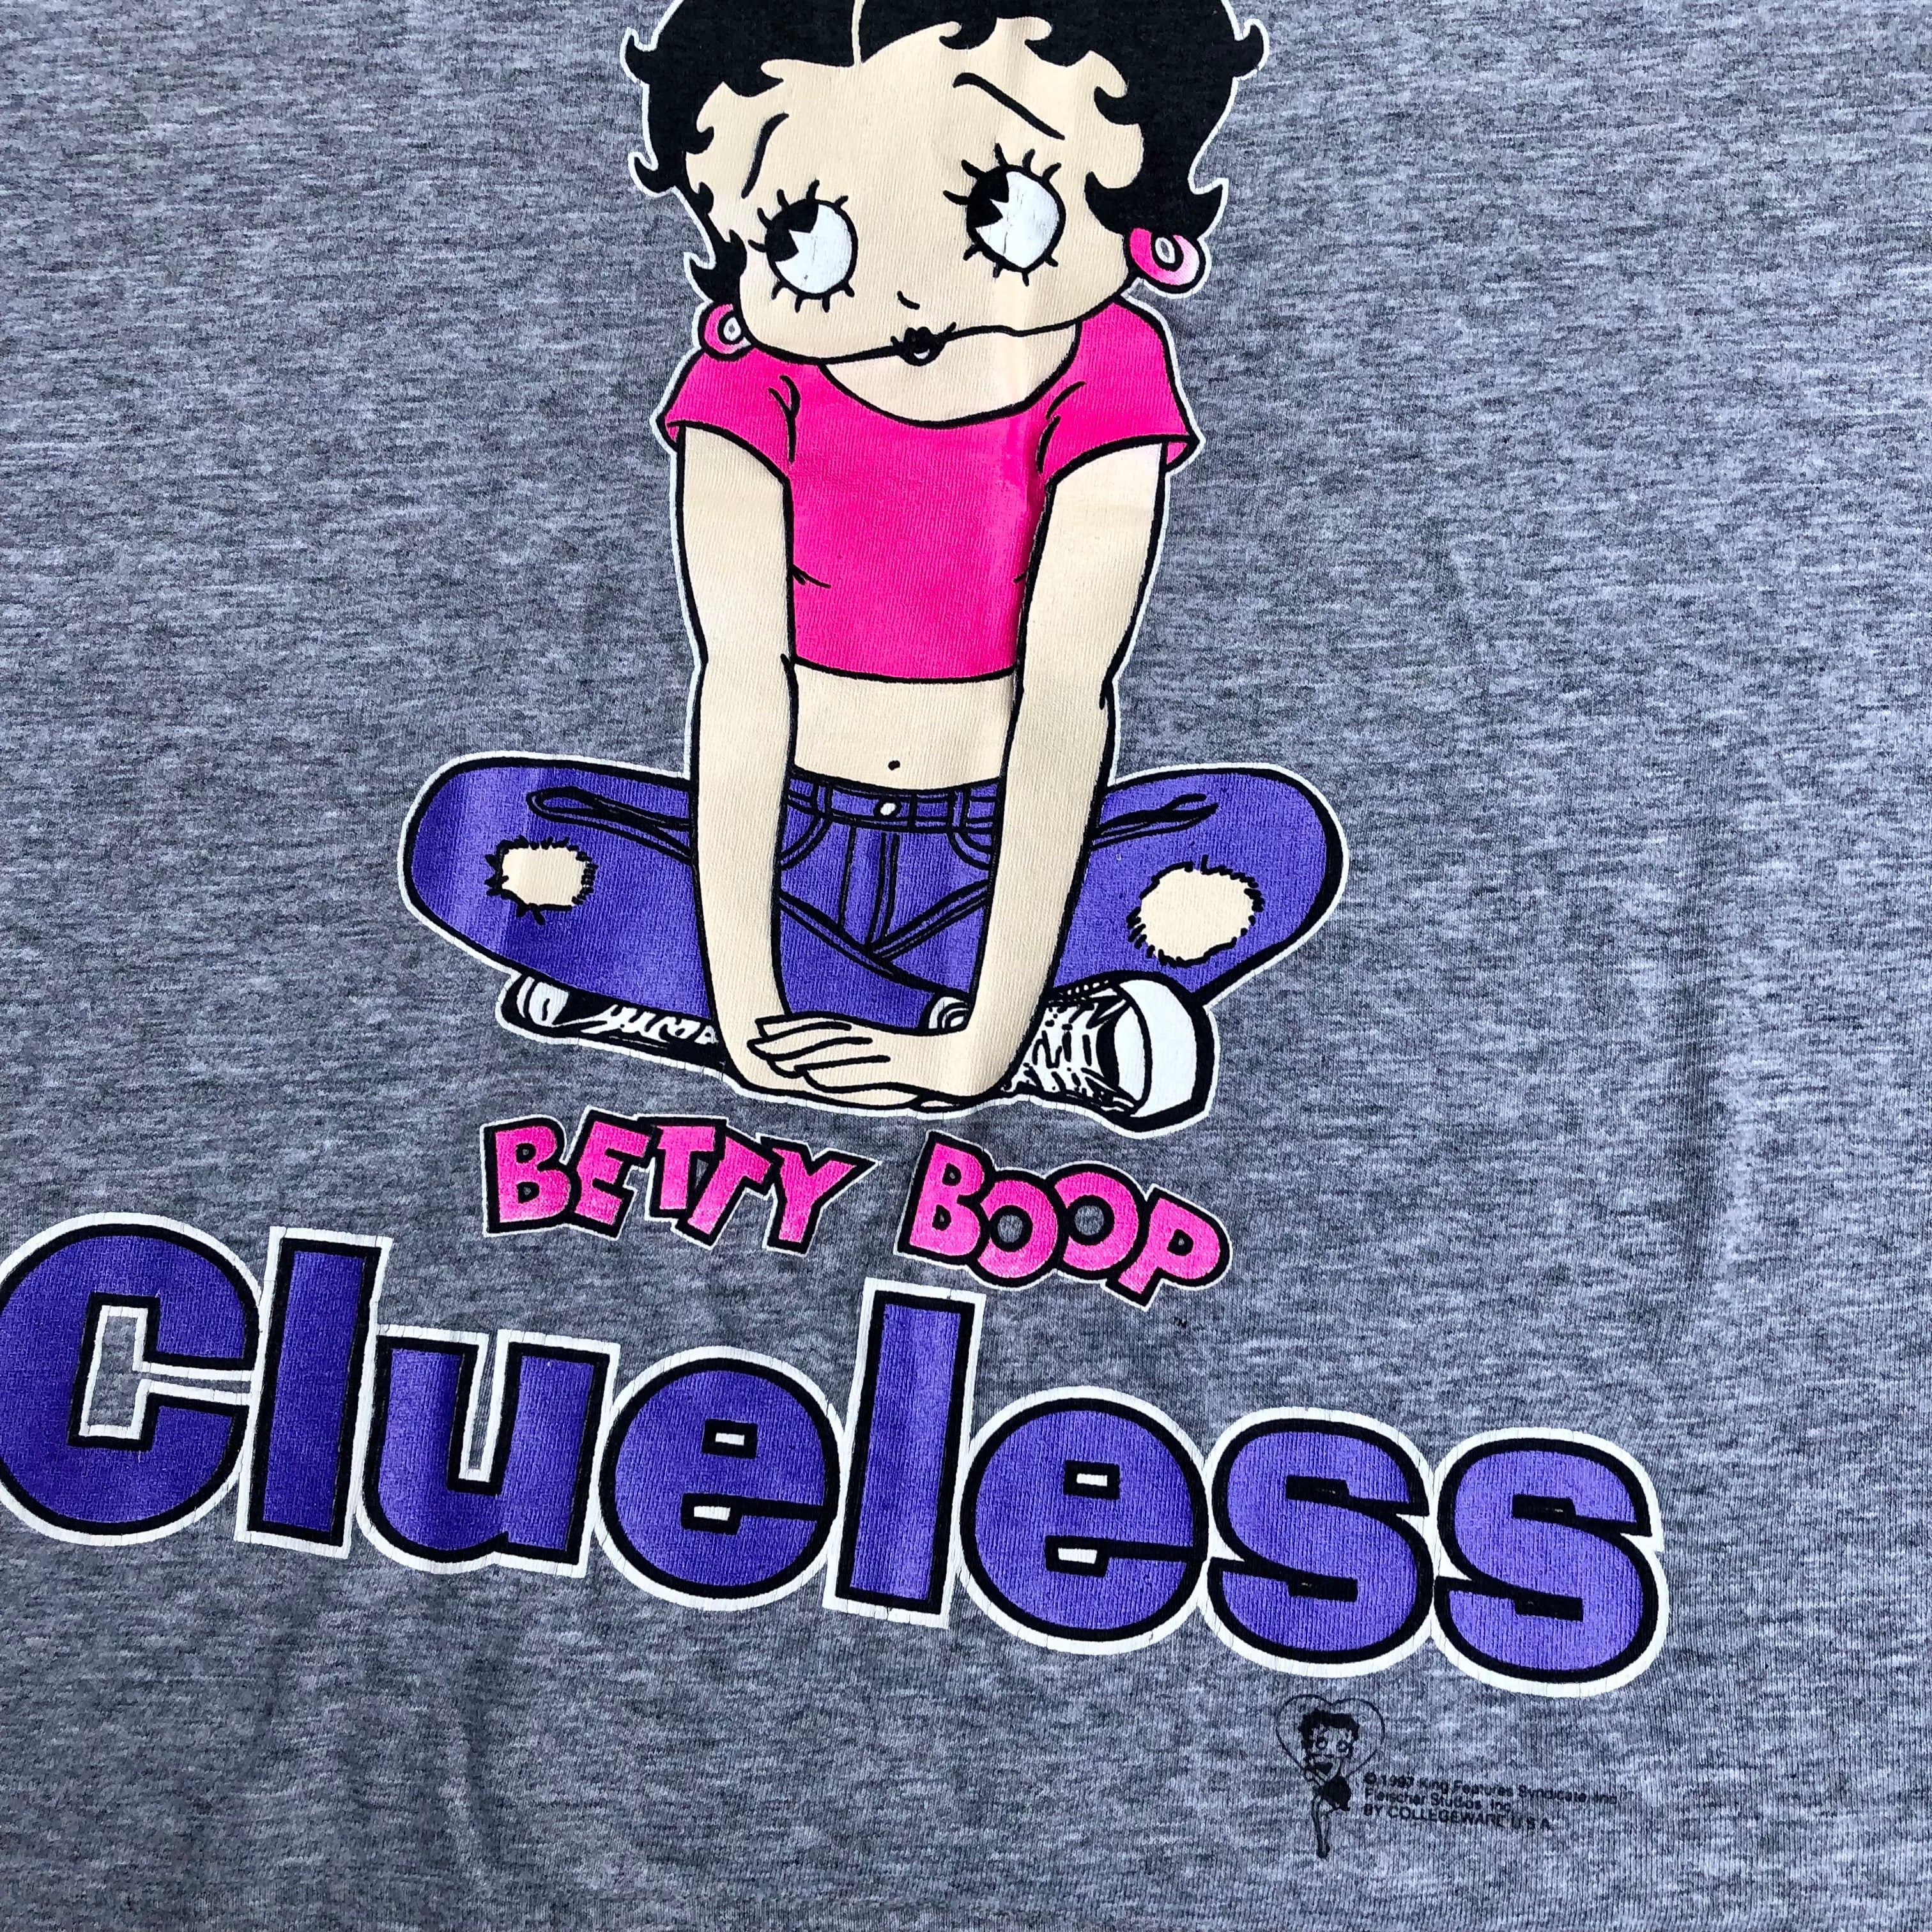 Clueless 1997 Betty Boop Tee